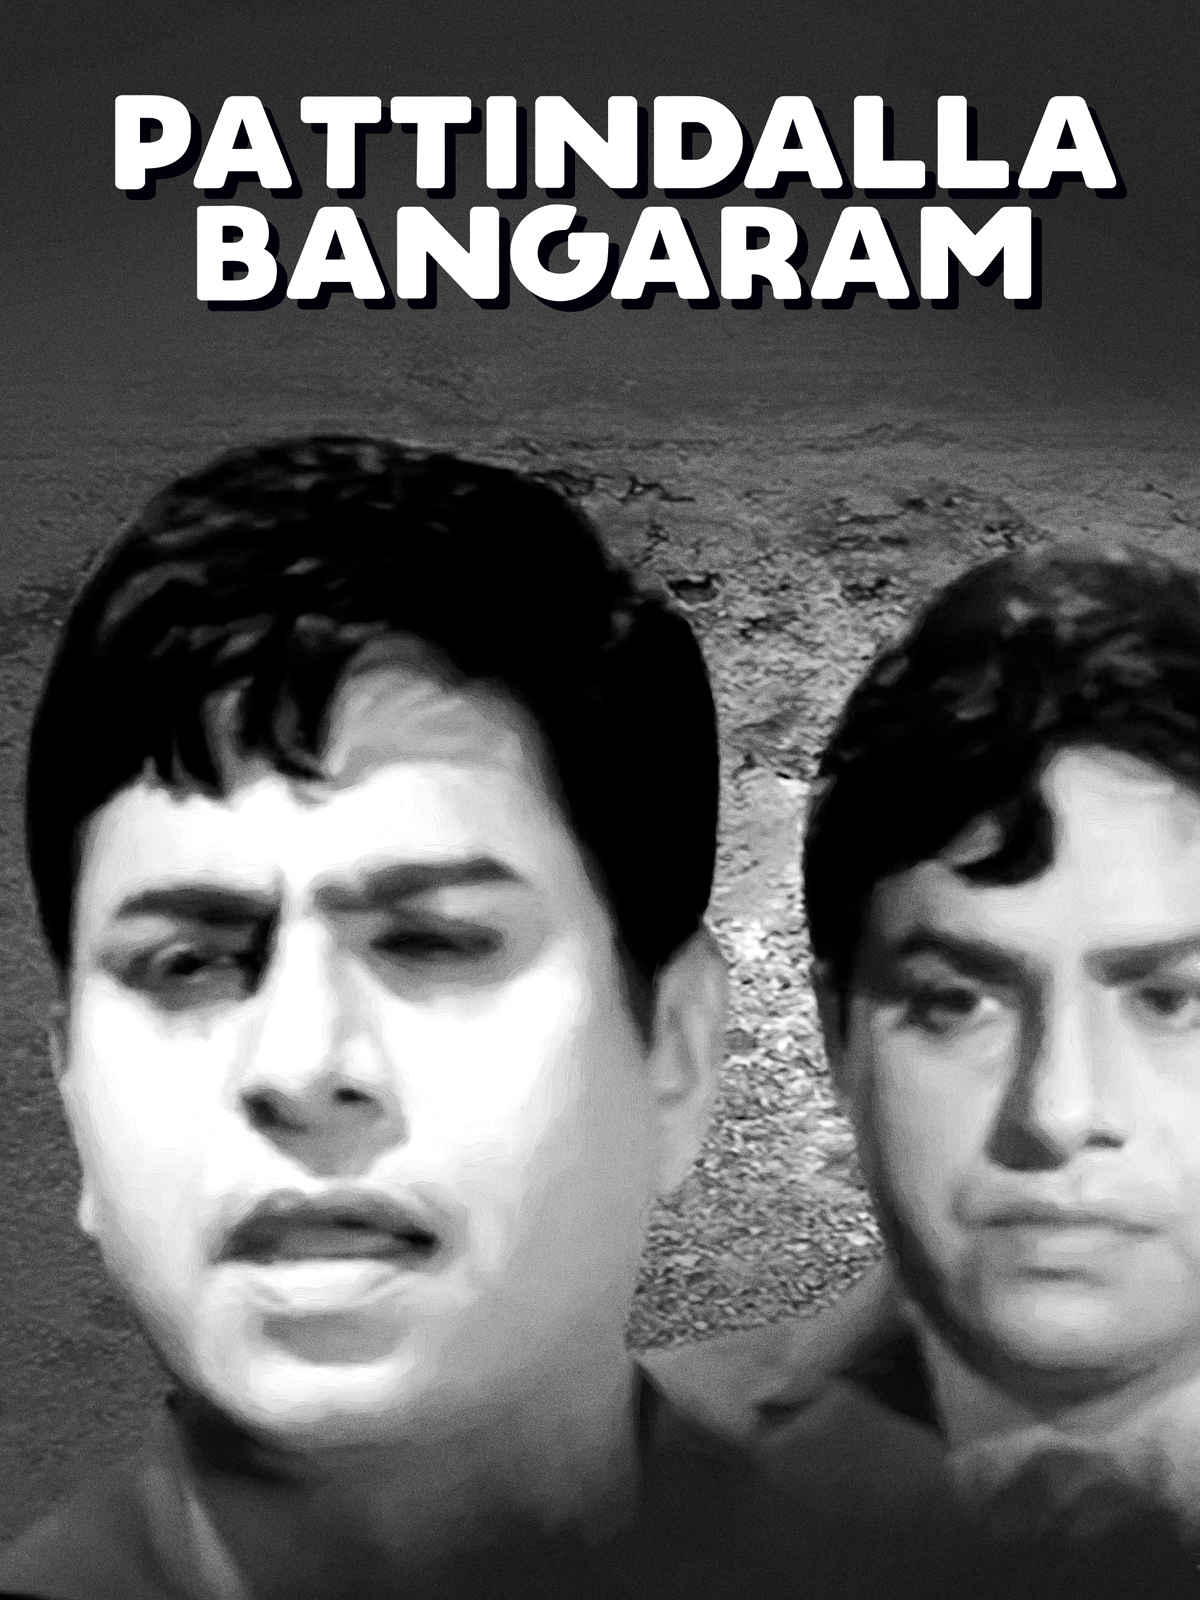 Pattindalla Bangaram